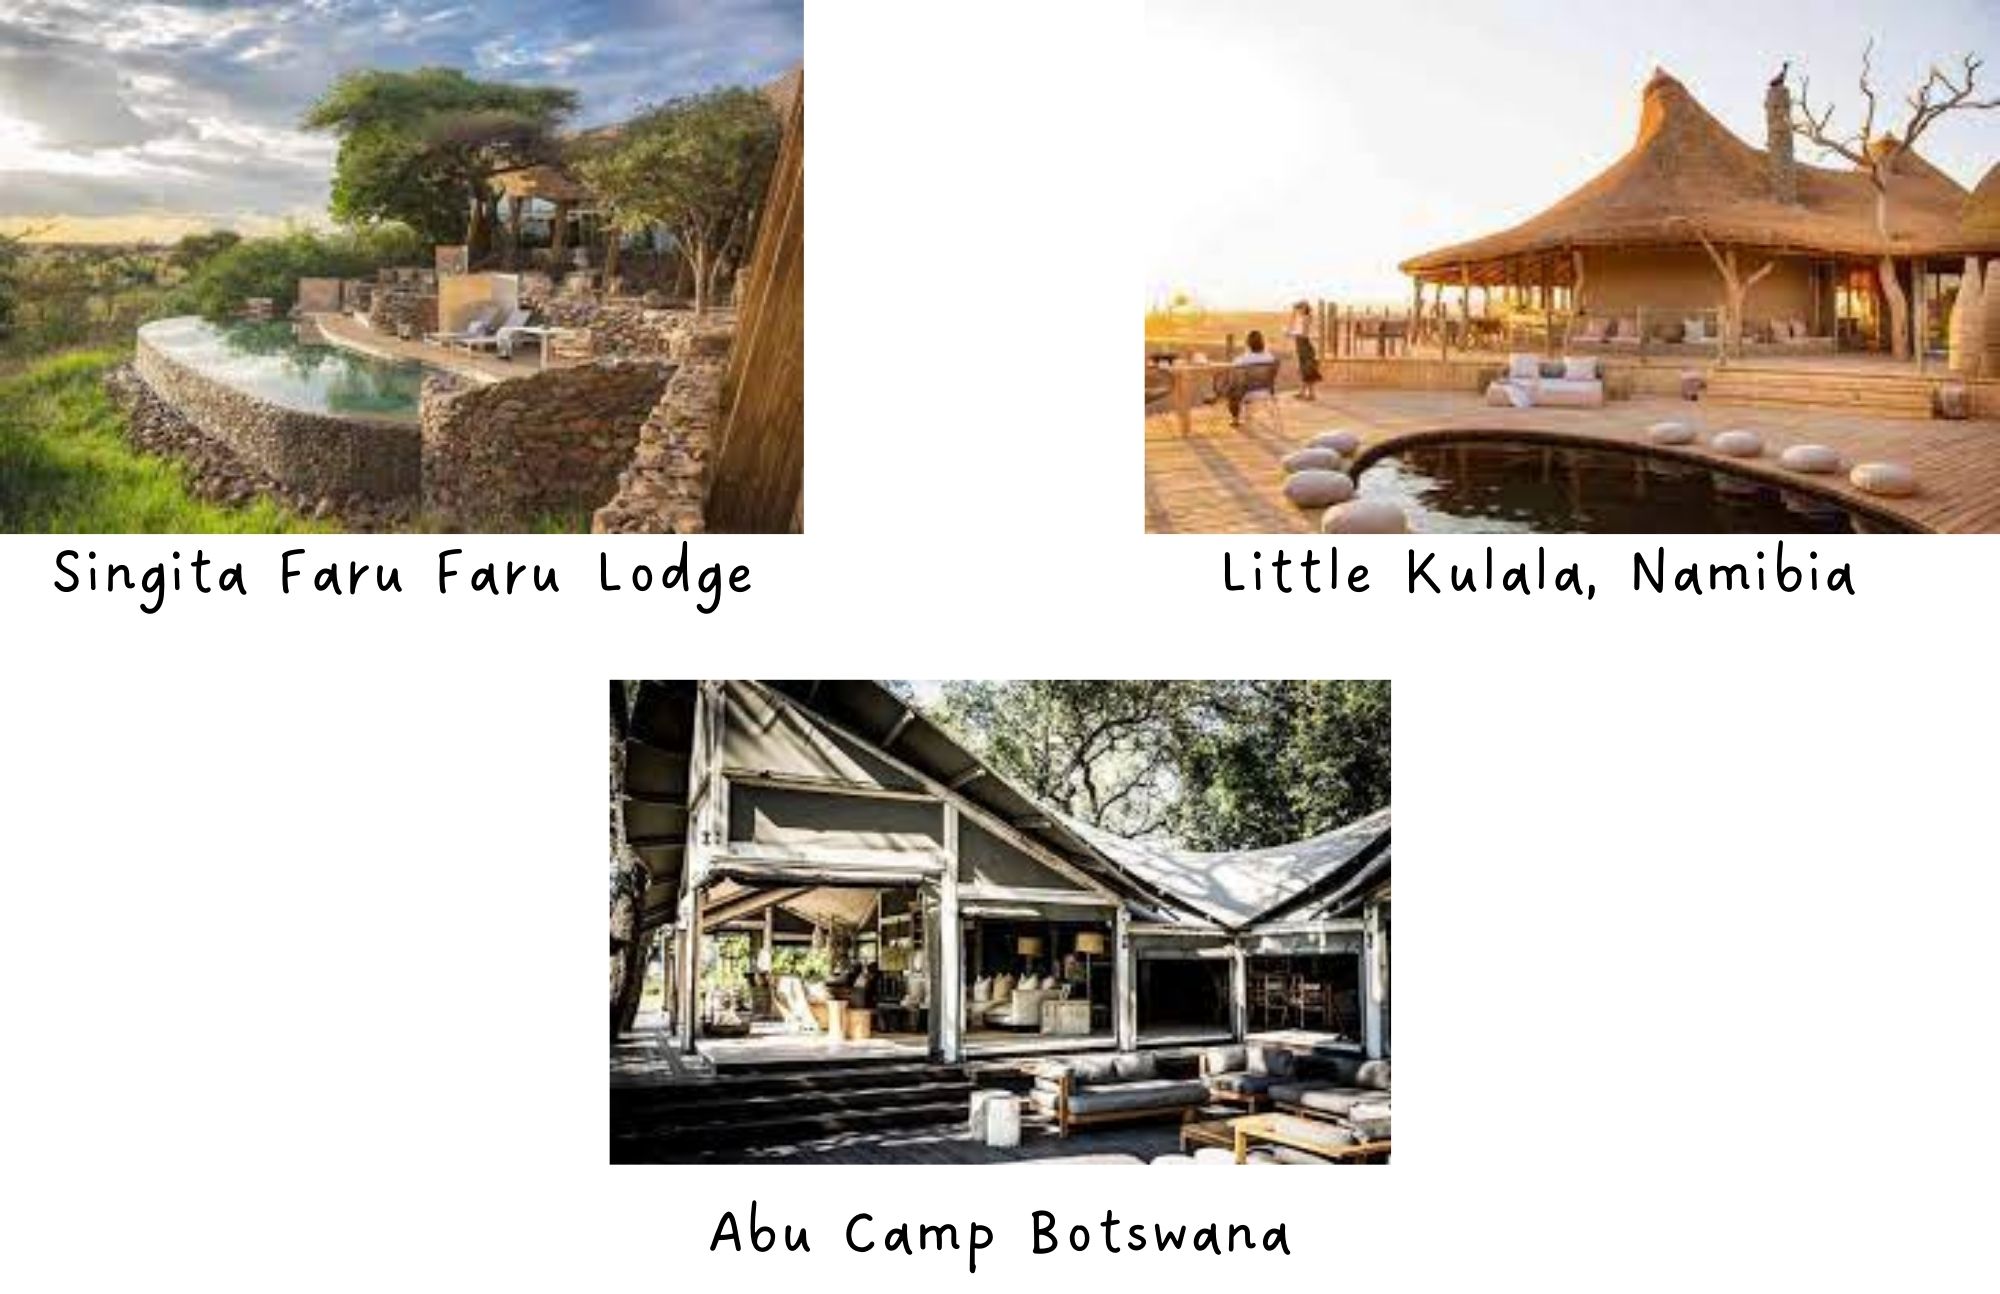 The three luxury lodges in Safari, such as Singita, Little Kulala, and Abu Camp